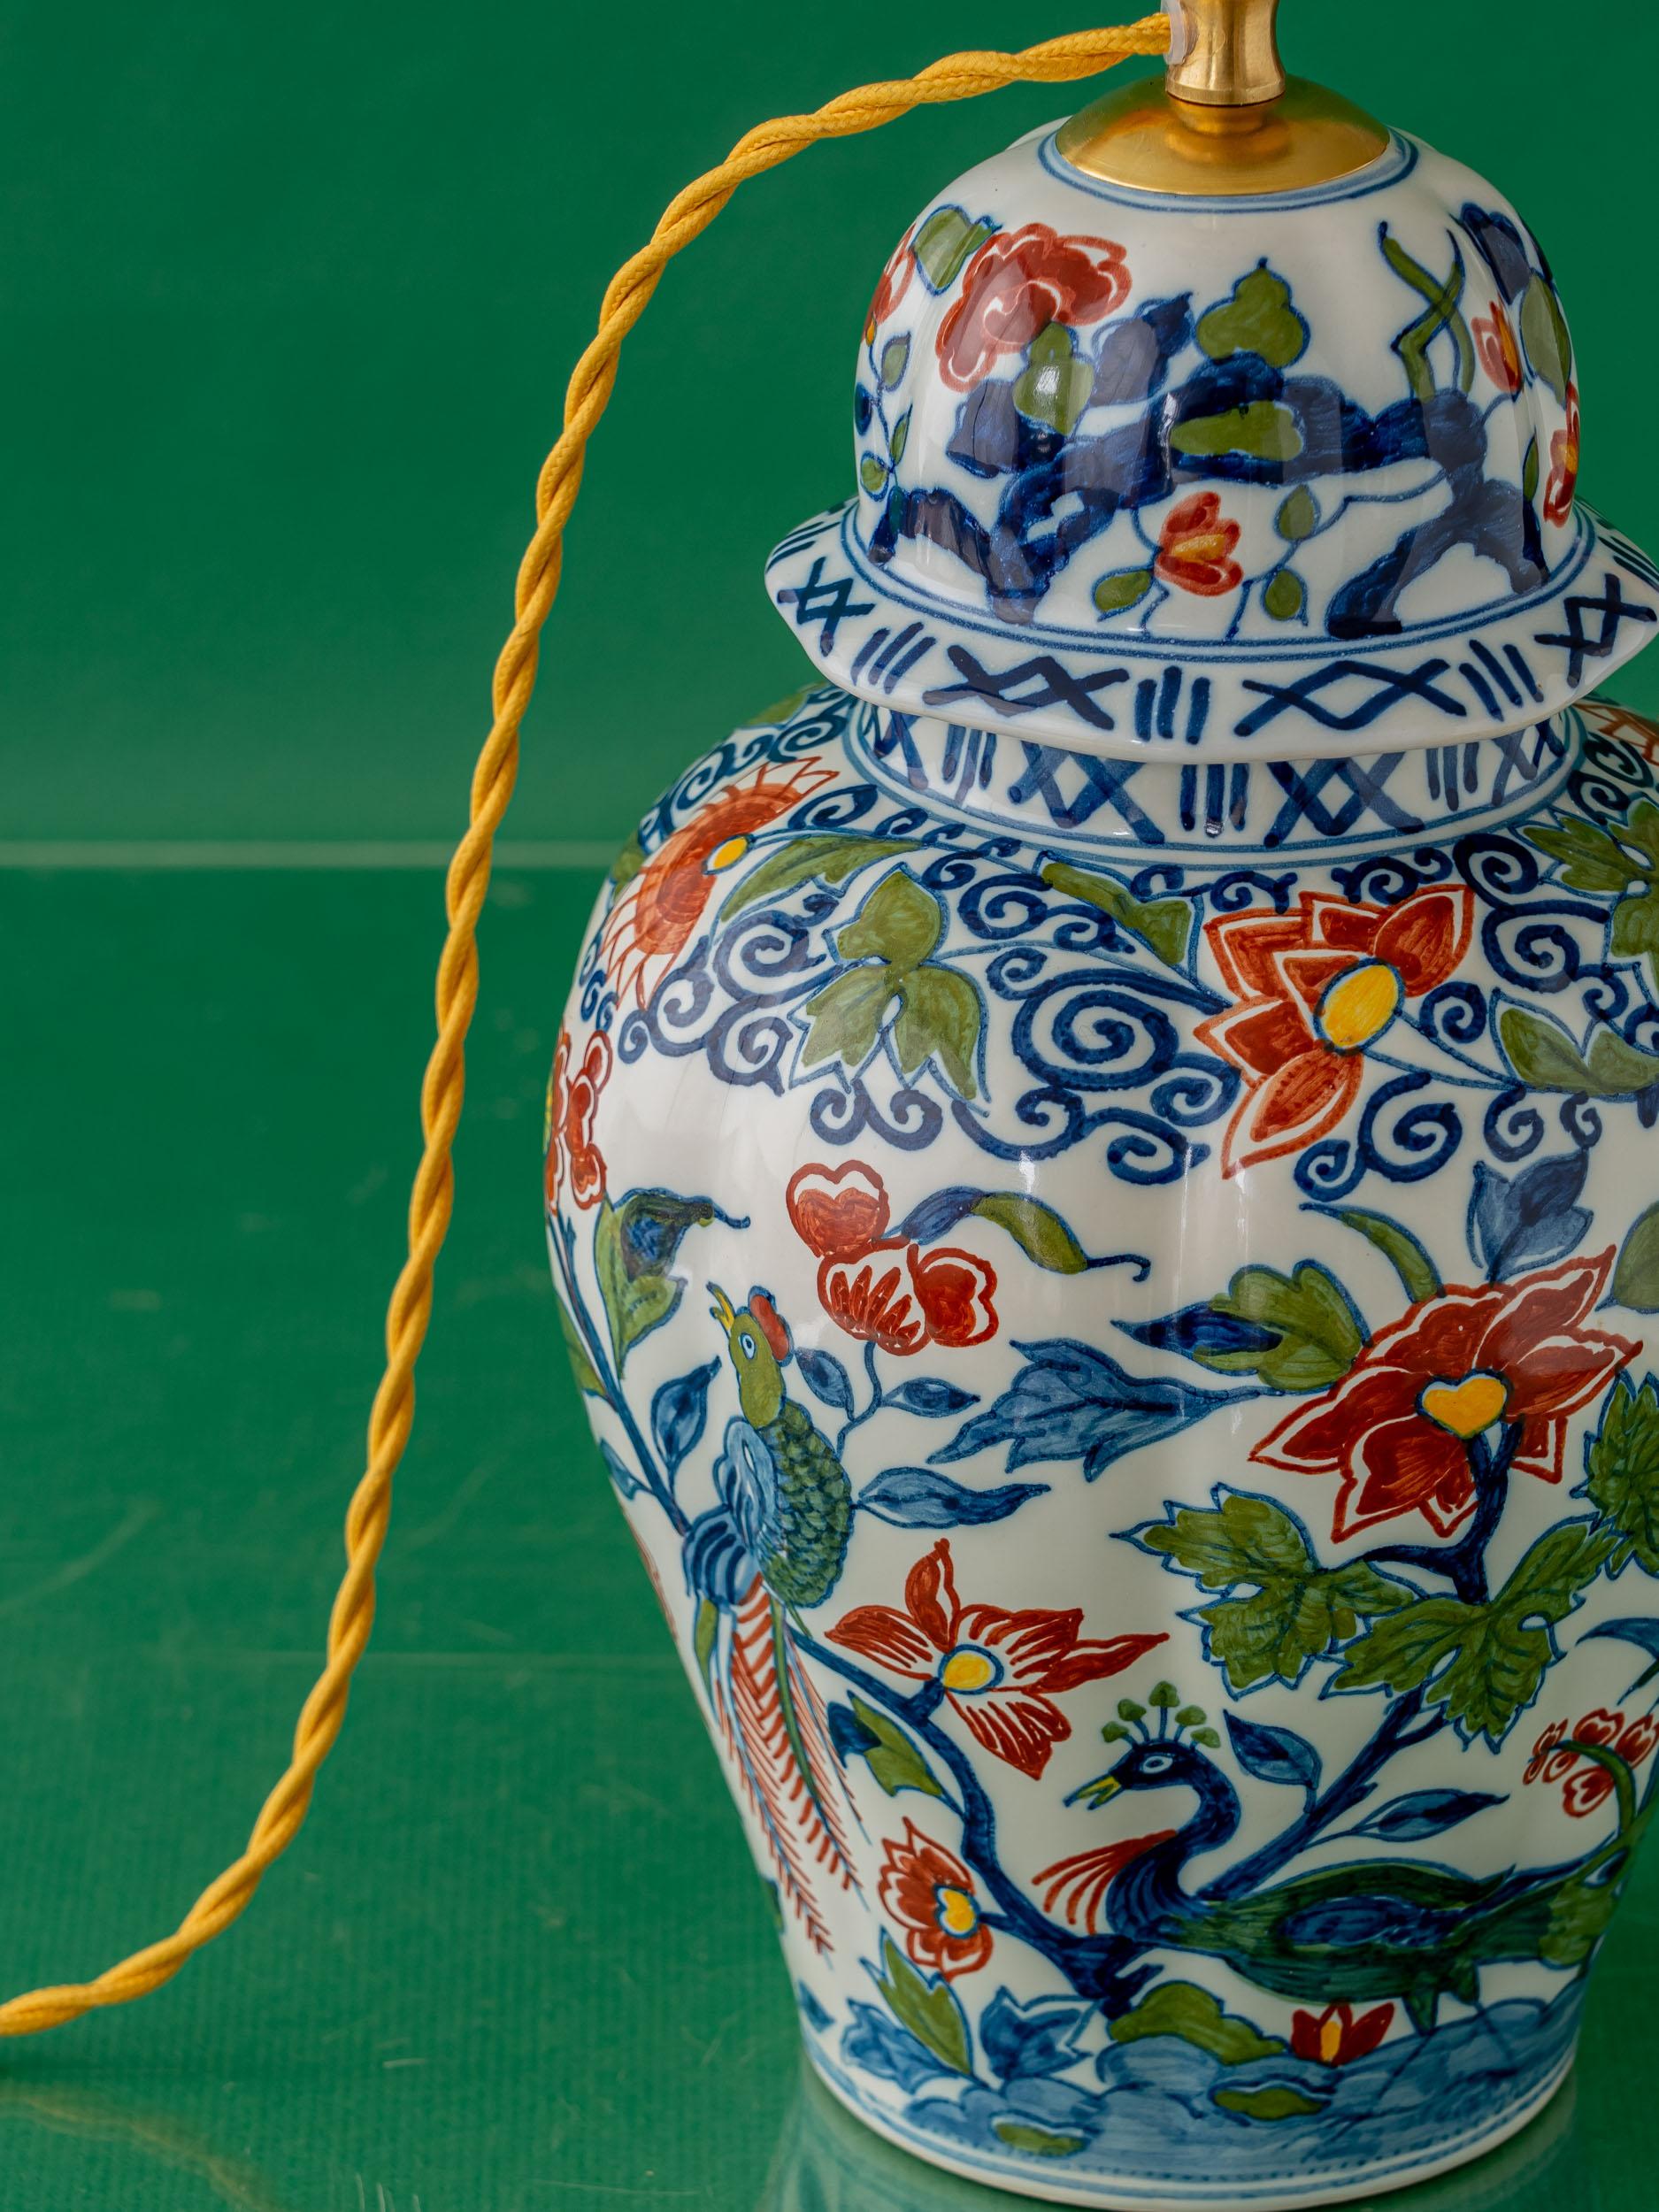 Chinoiserie Royal Tichelaar Makkum Delft Table Lamps, Hand-Painted